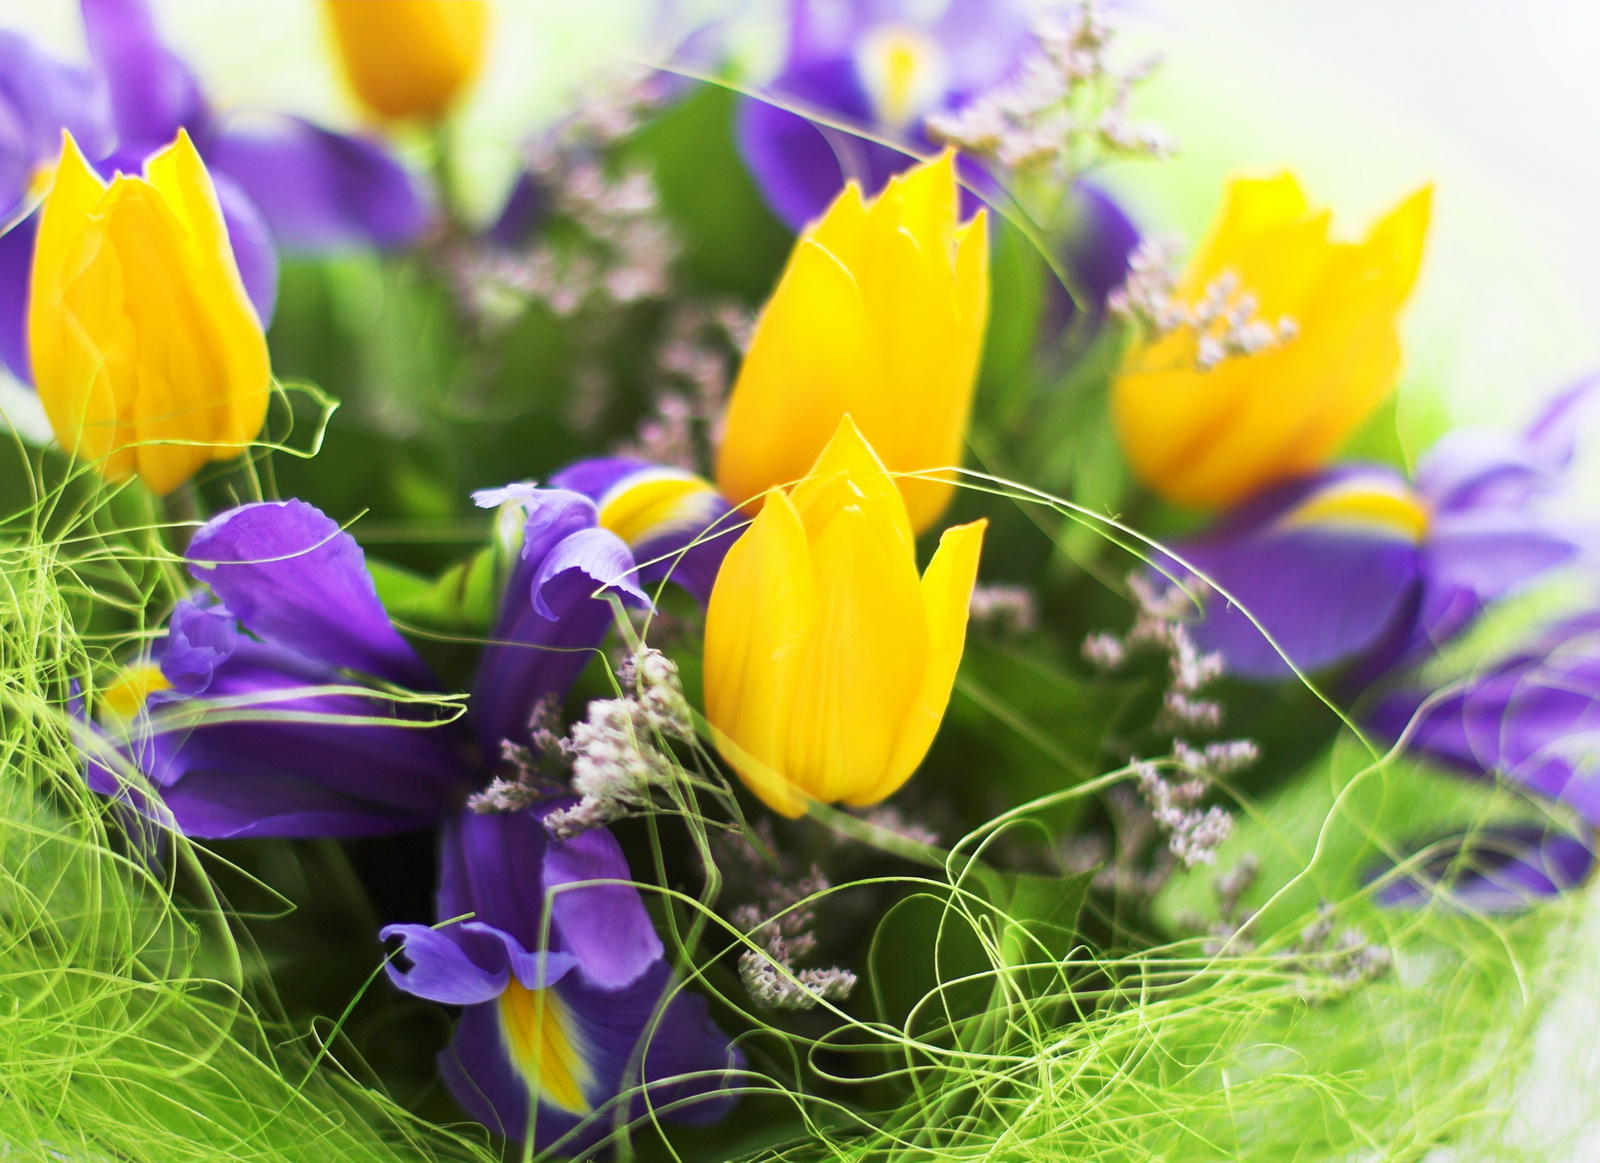 http://travelpoisk.ru/data/albums/21/Bouquet__Violet_irises_and_yellow_tulips__Macro.jpg